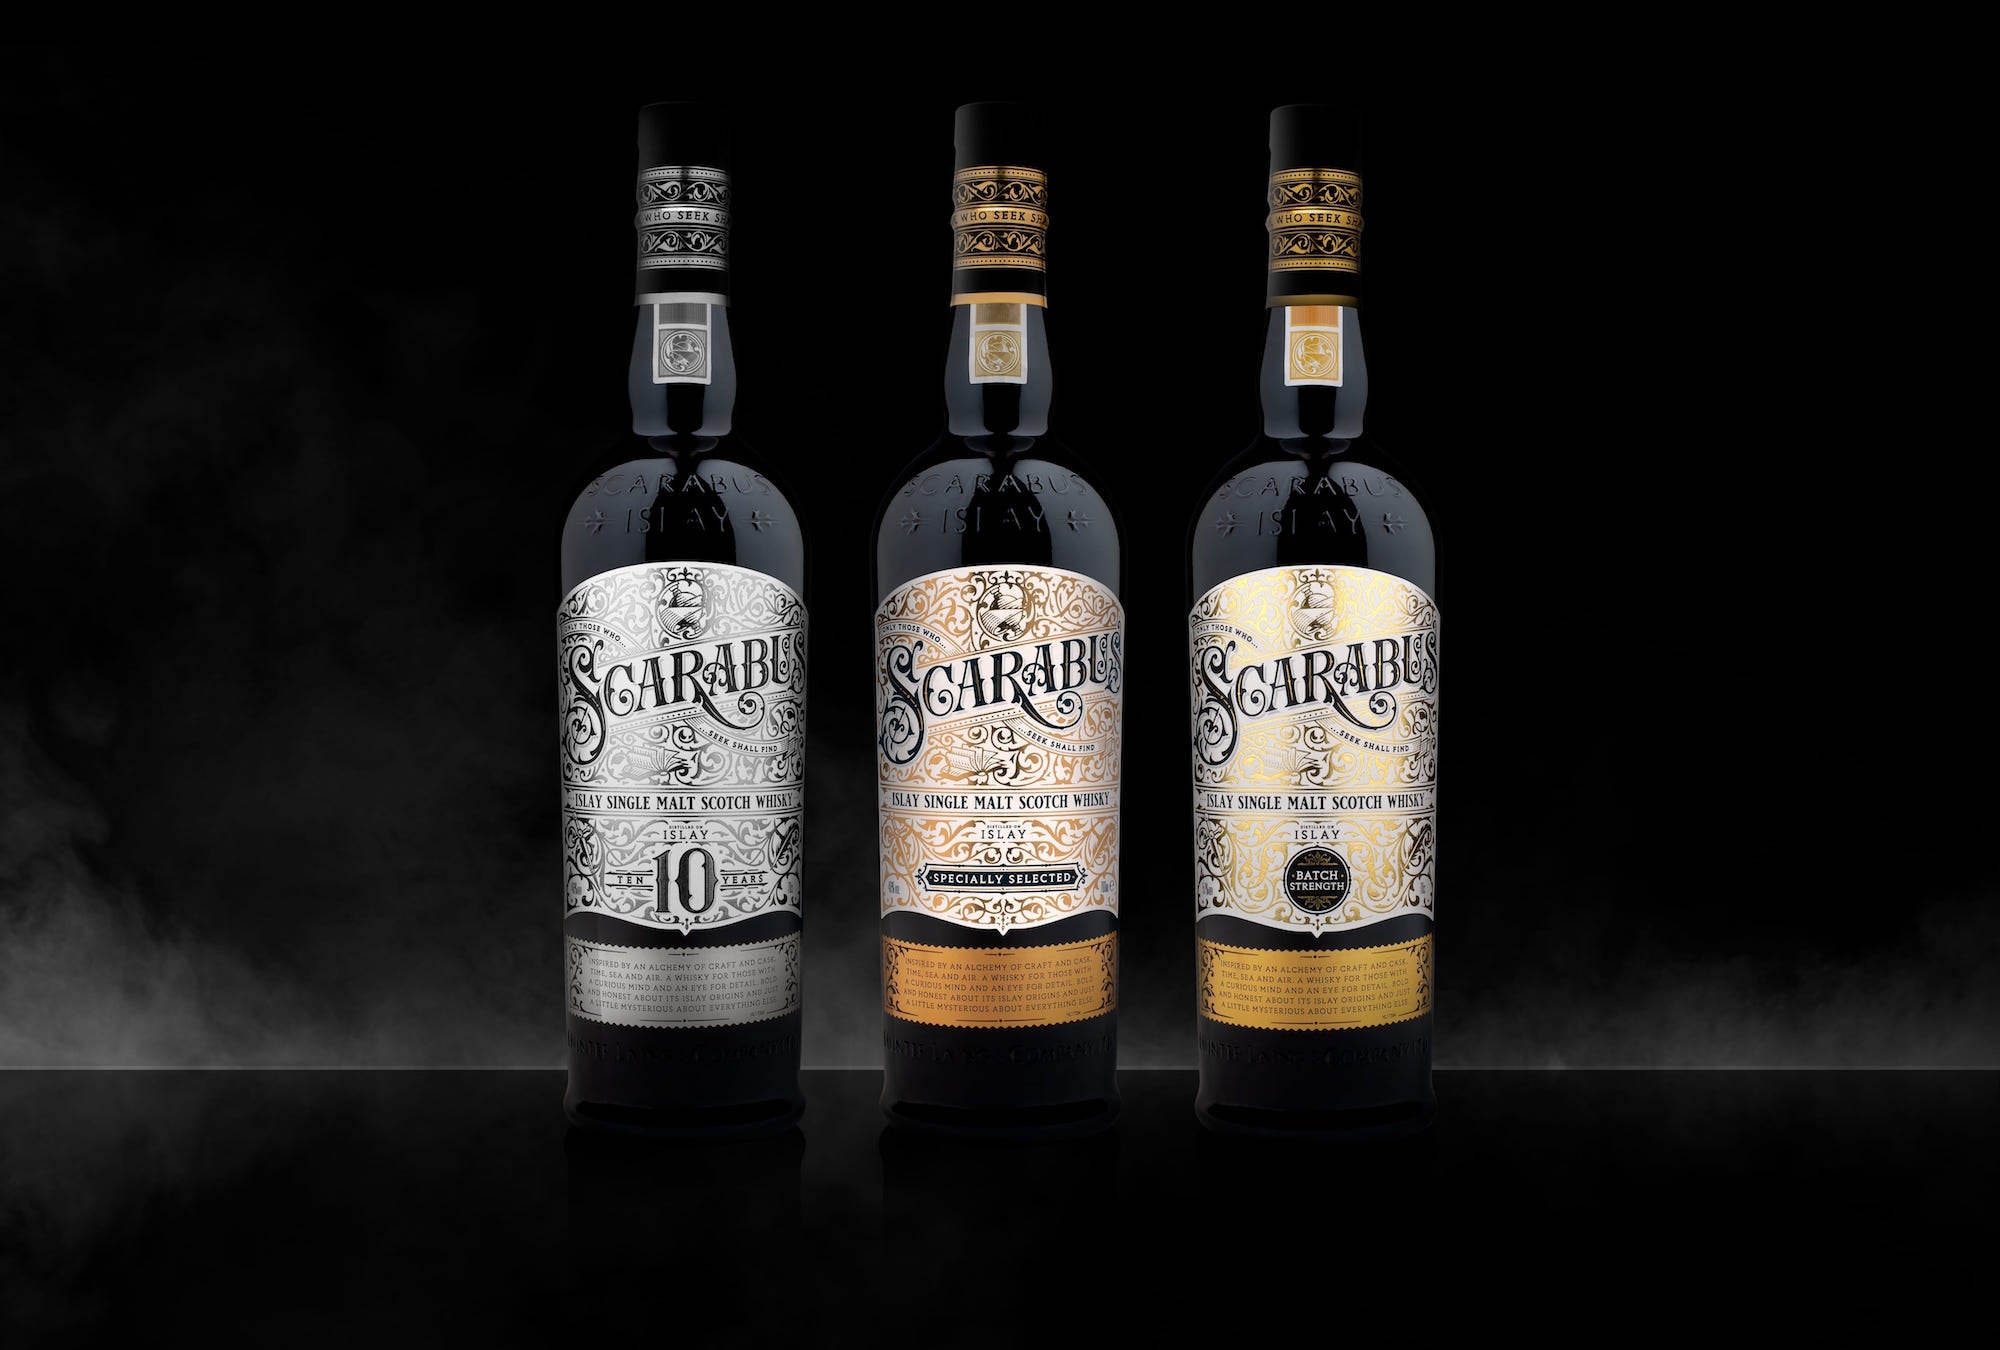 Scarabus 10 Year Old and Scarabus Batch Strength Islay Single Malt Scotch Whisky